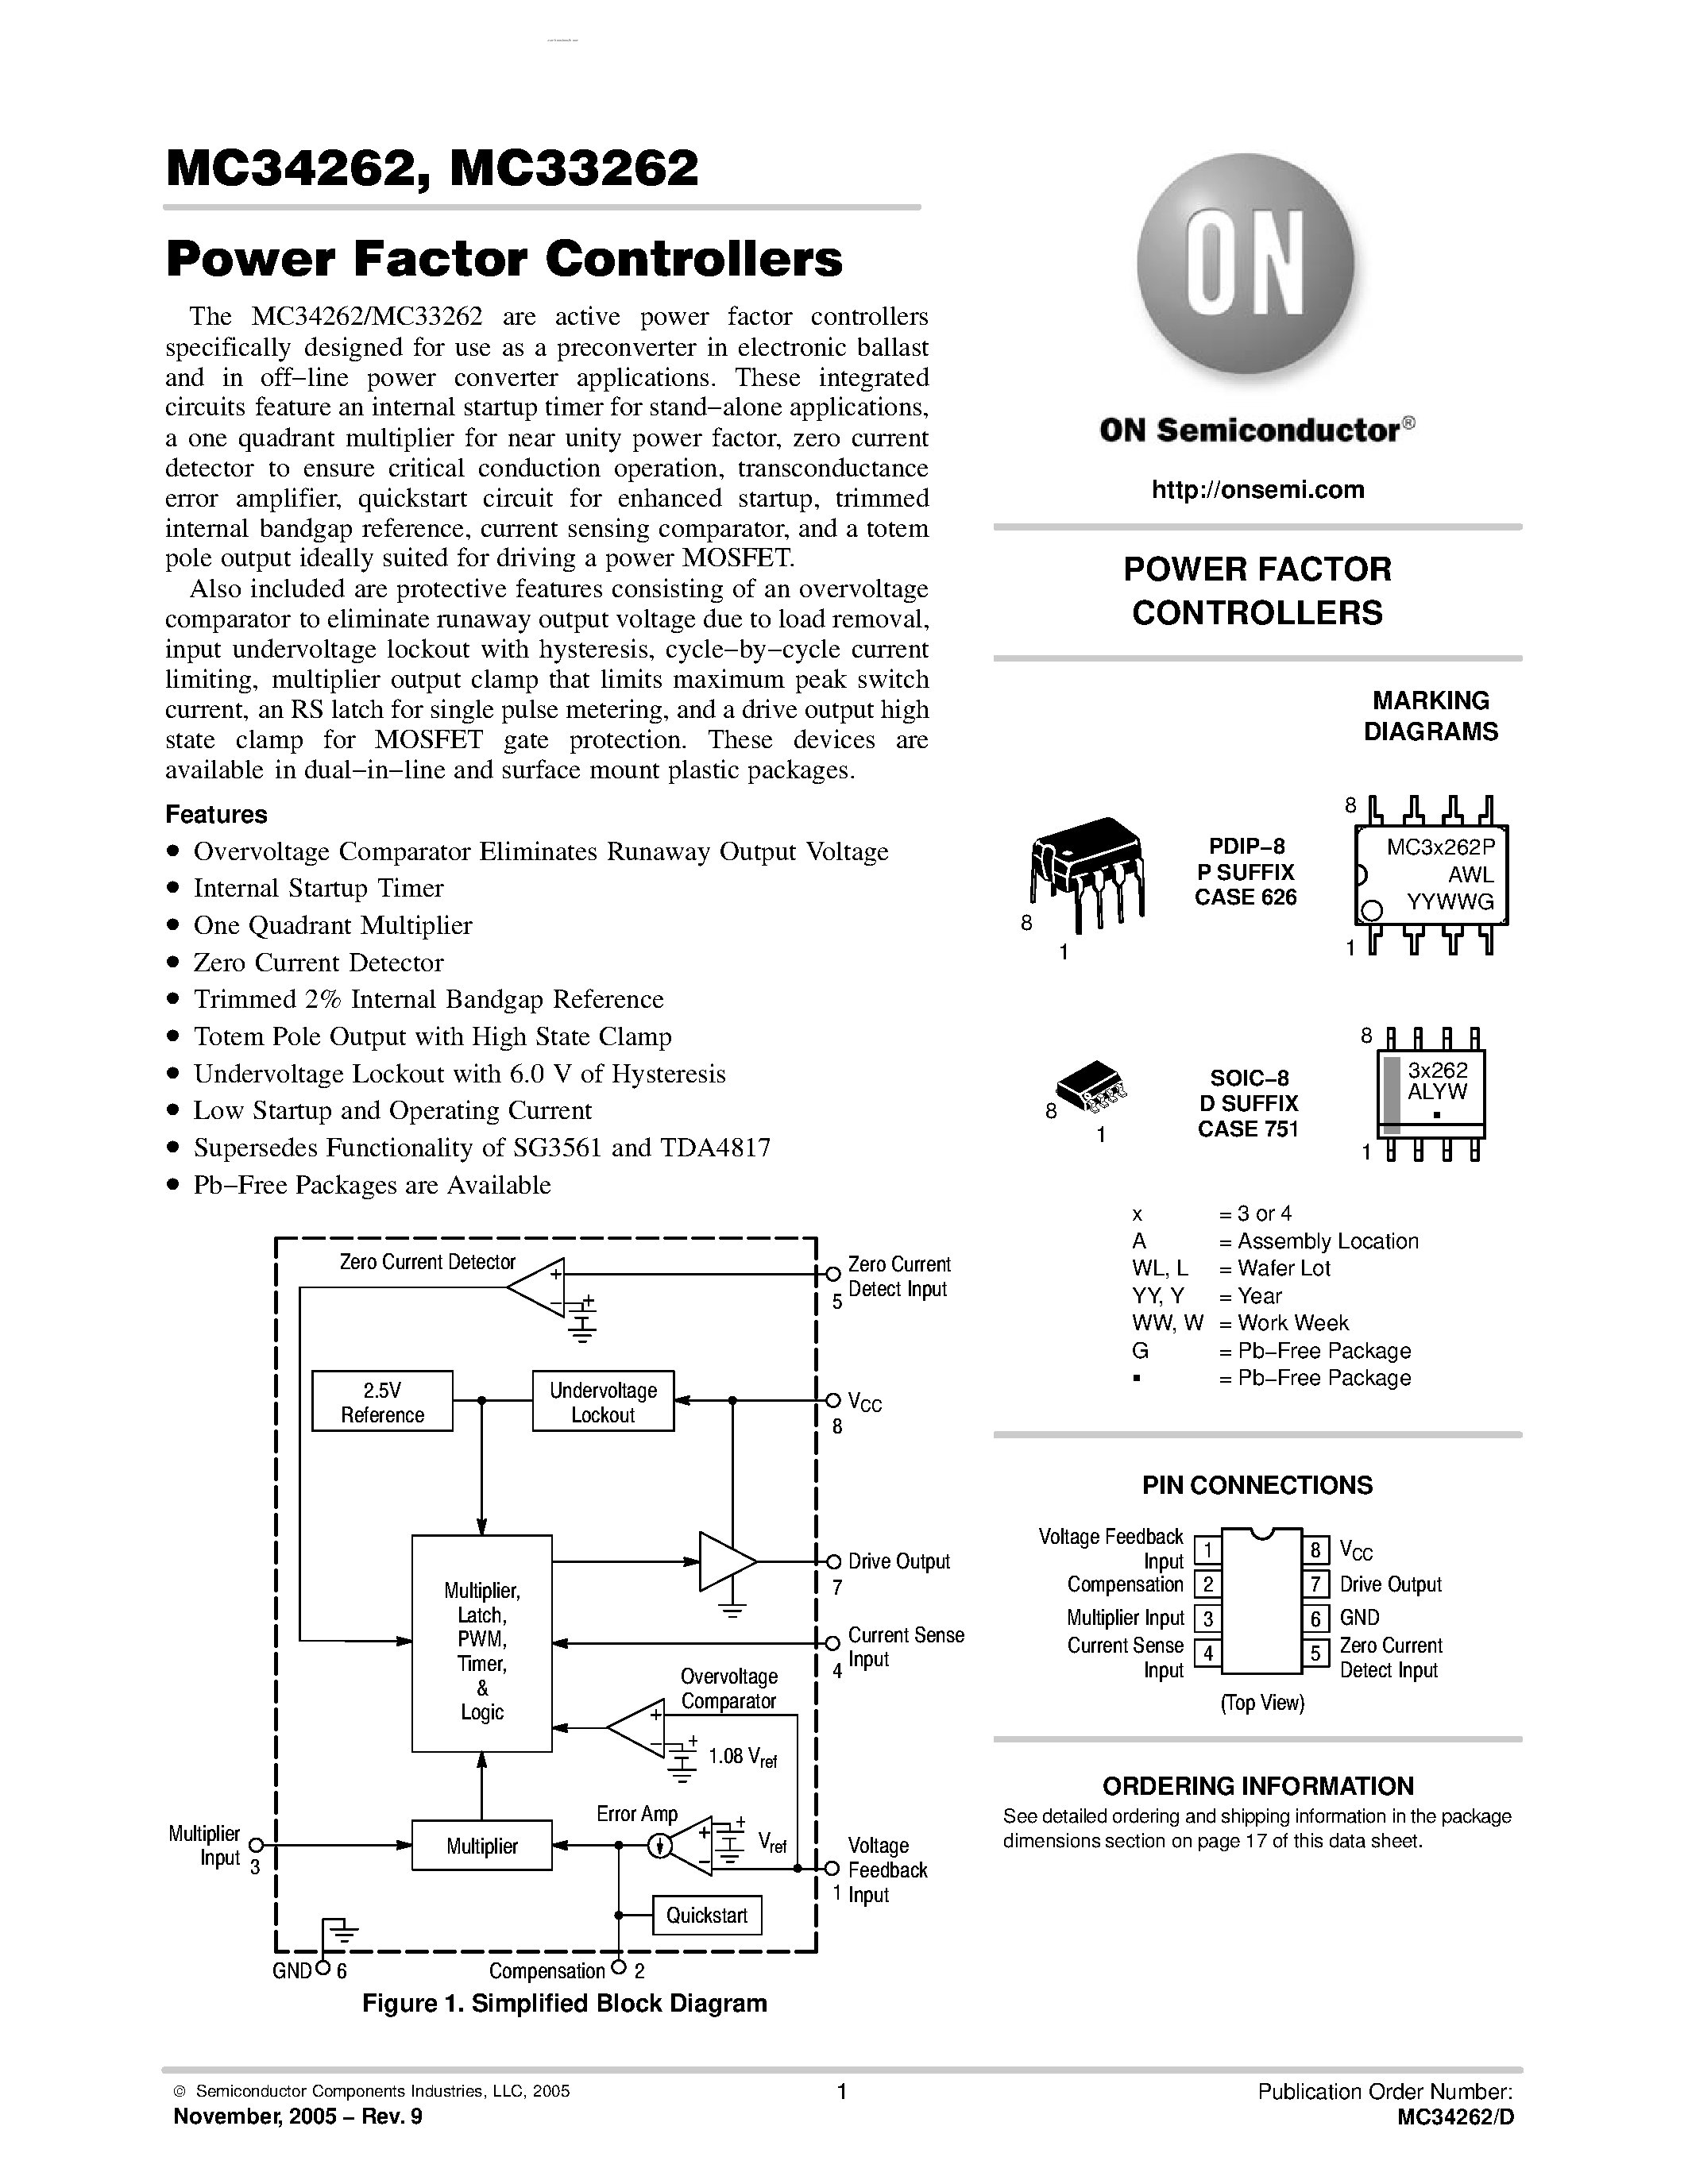 Даташит MC33262 - (MC33262 / MC34262) Power Factor Controllers страница 1